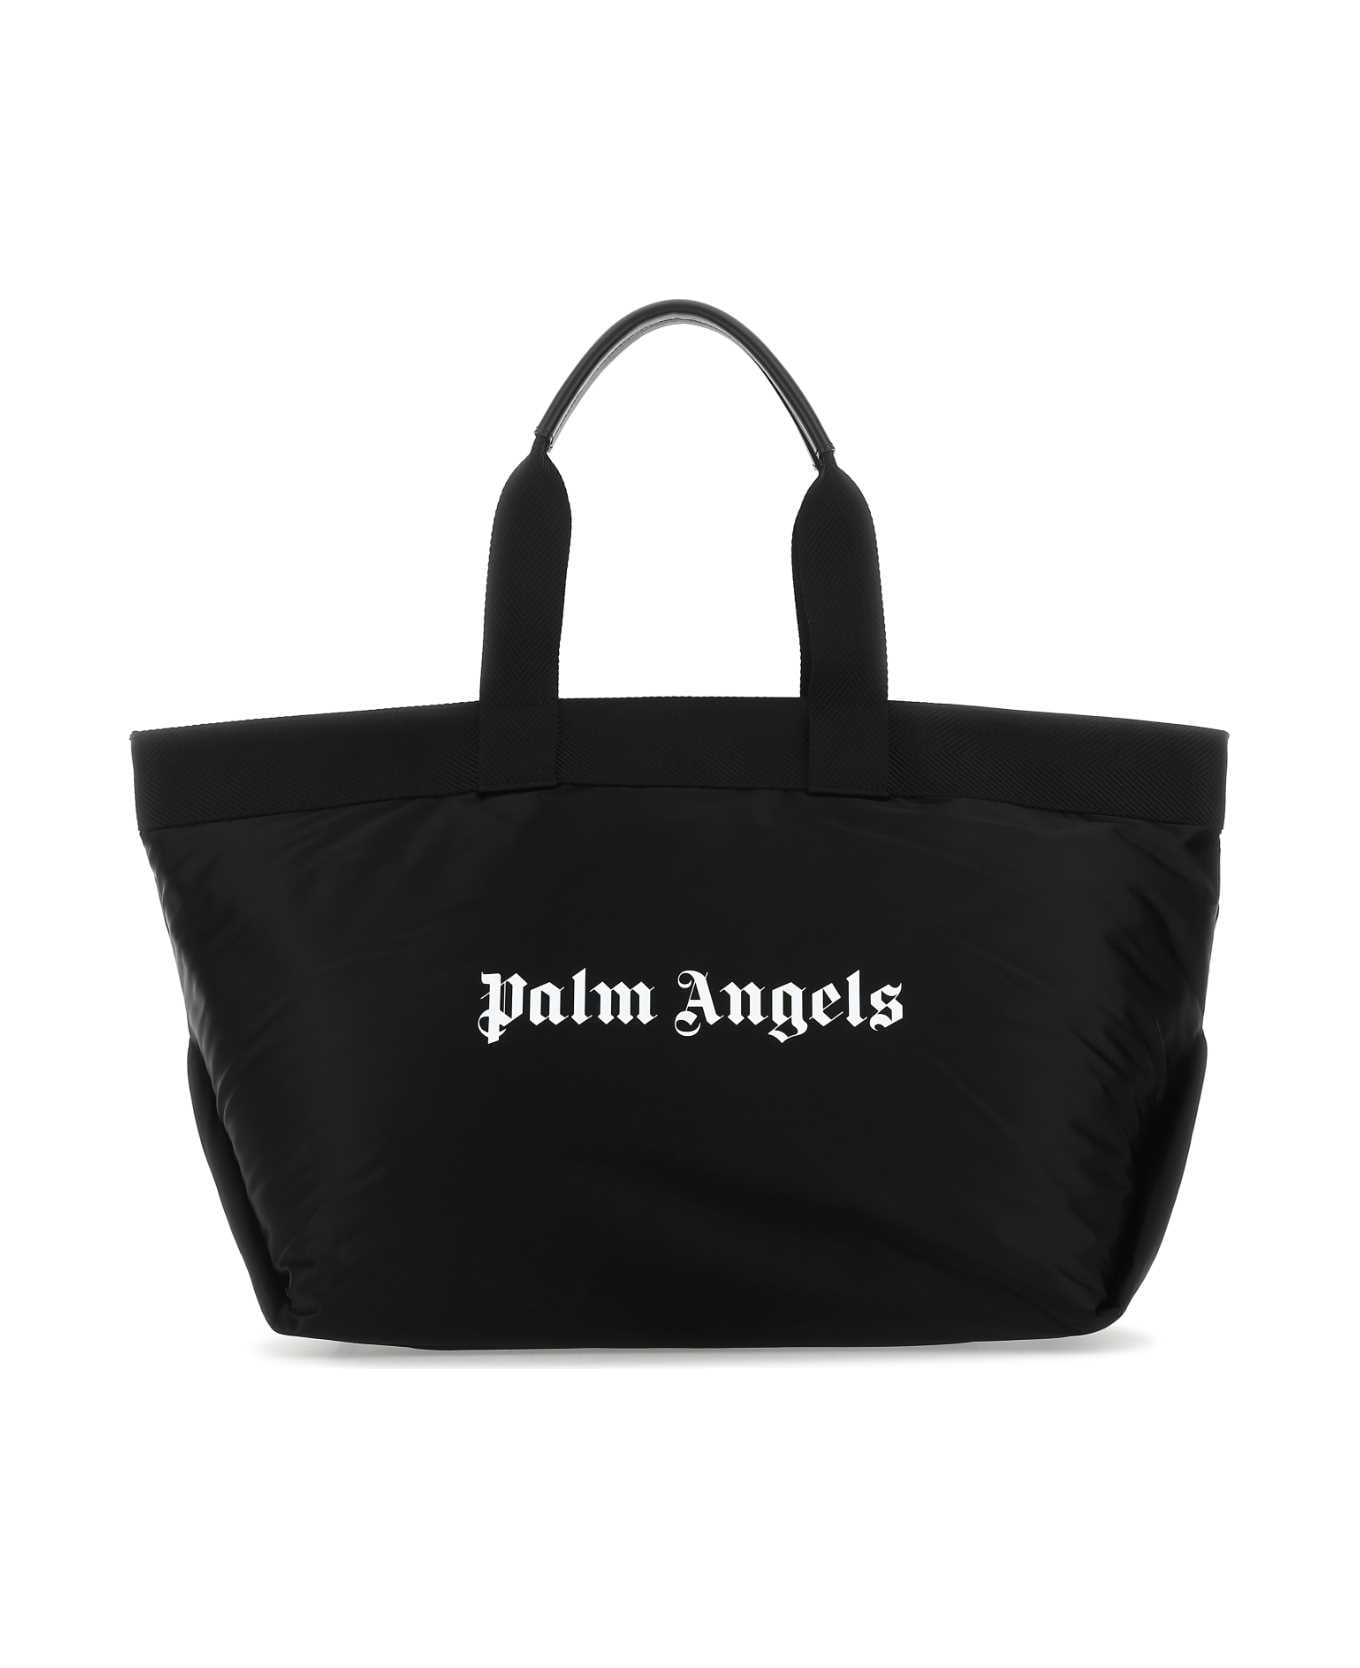 Palm Angels Black Fabric Shopping Bag - 1001 トートバッグ